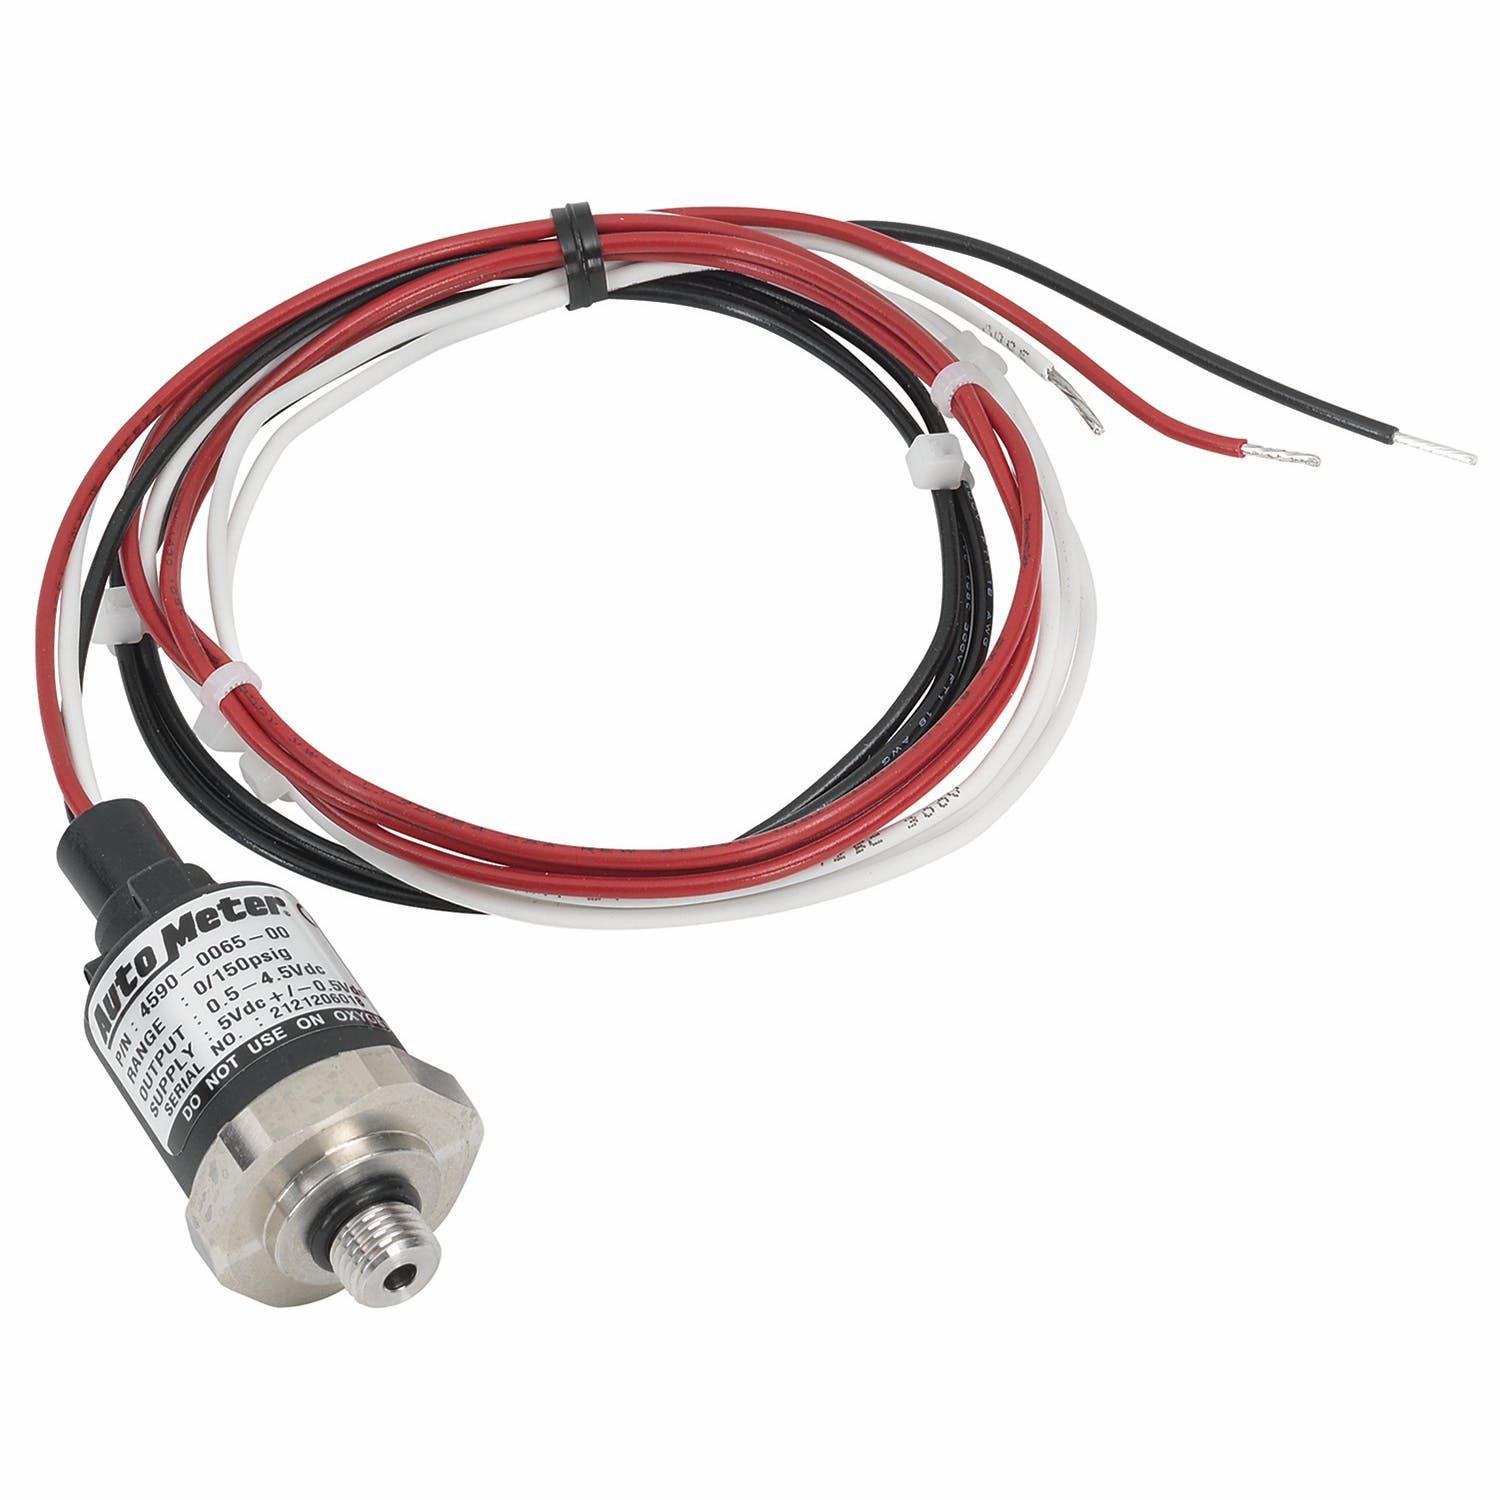 AutoMeter Products P13124 Spek Pro Pressure Sensor 0-150 PSI, 3/8-24 Ashcroft